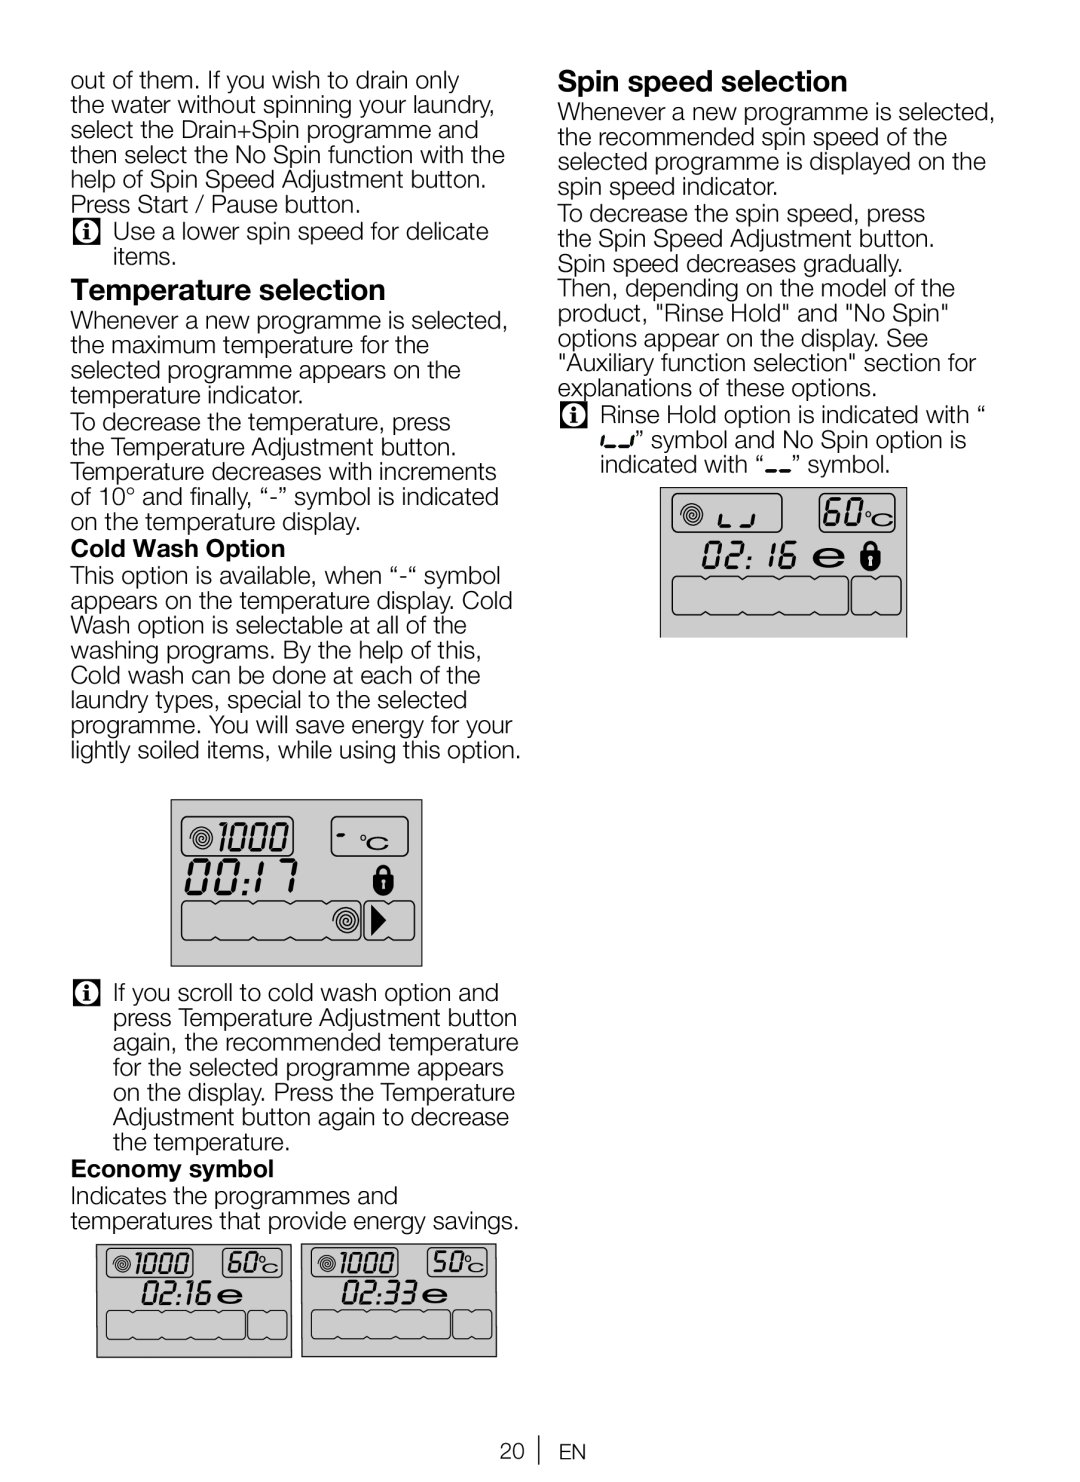 Beko WBM 751441 LA user manual Temperature selection, Spin speed selection, Cold Wash Option, Economy symbol 